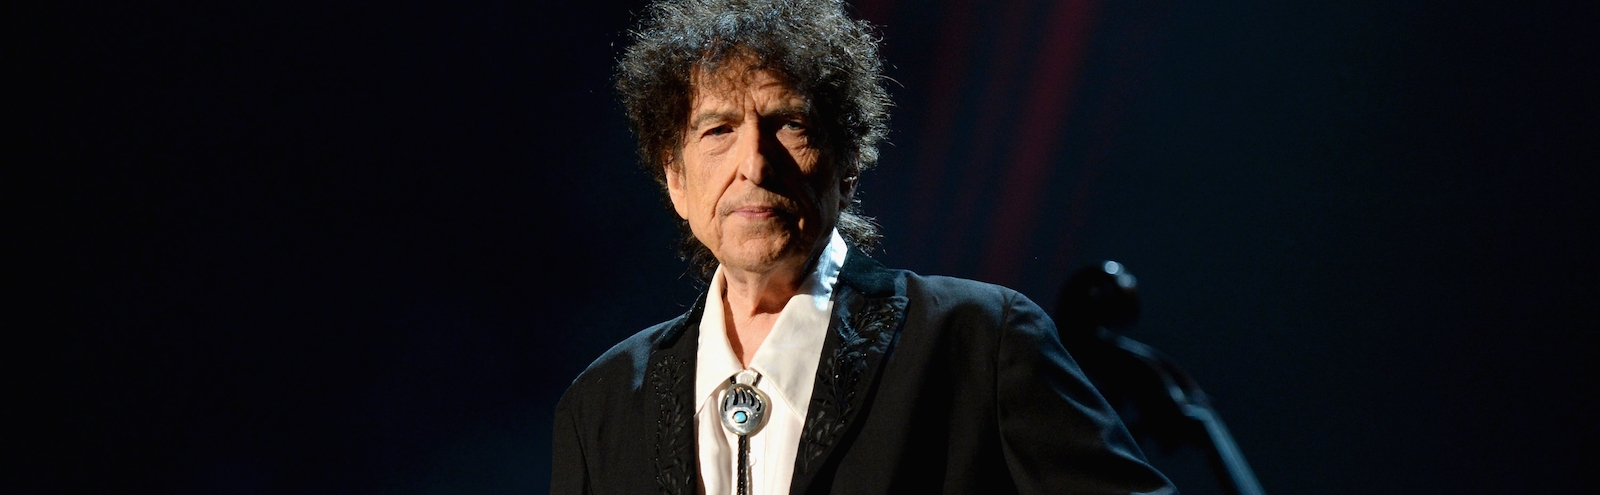 Bob Dylan Artwork Miami Exhibit